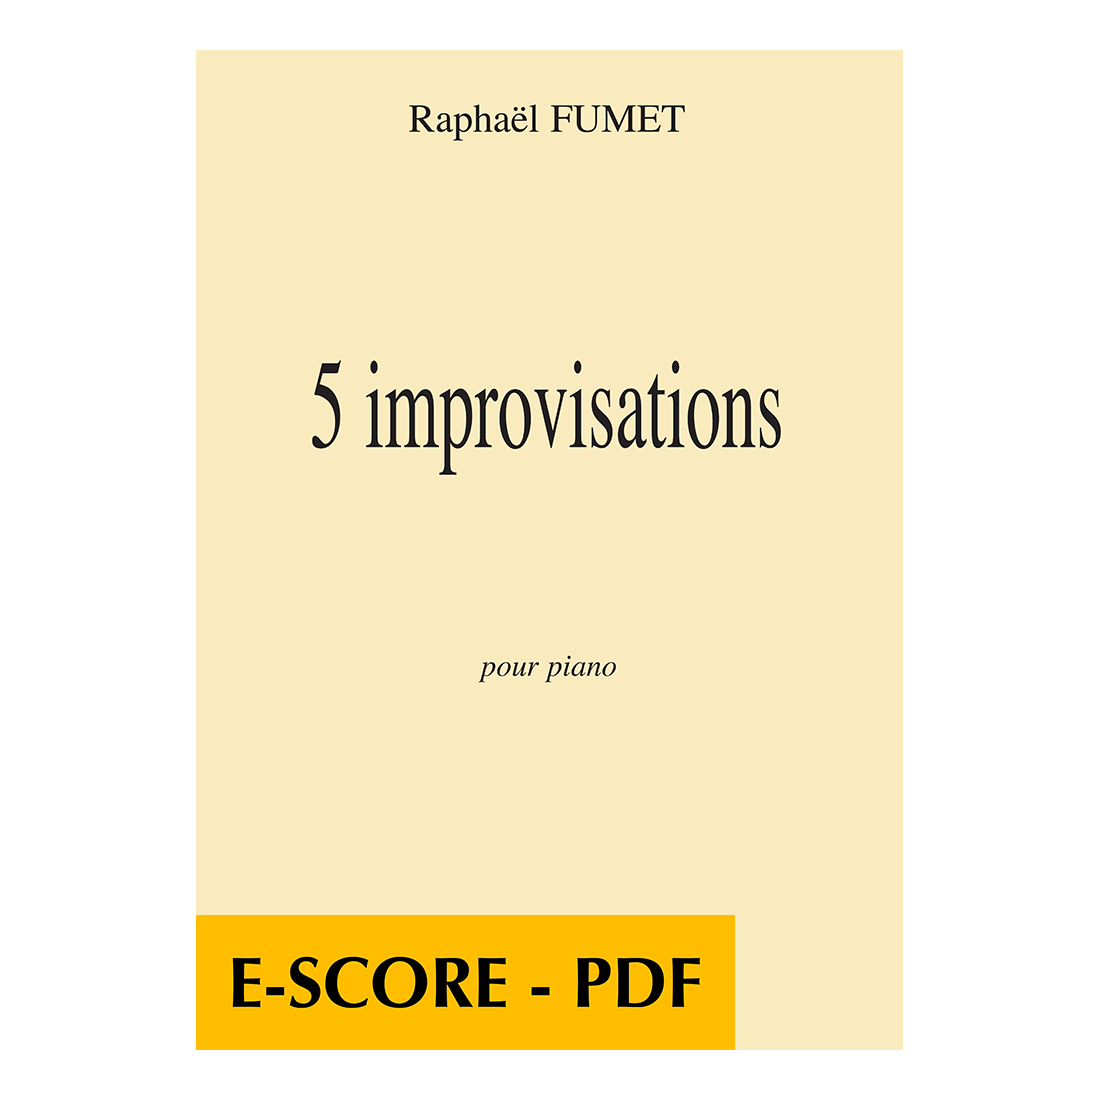 5 improvisations pour piano - E-score PDF